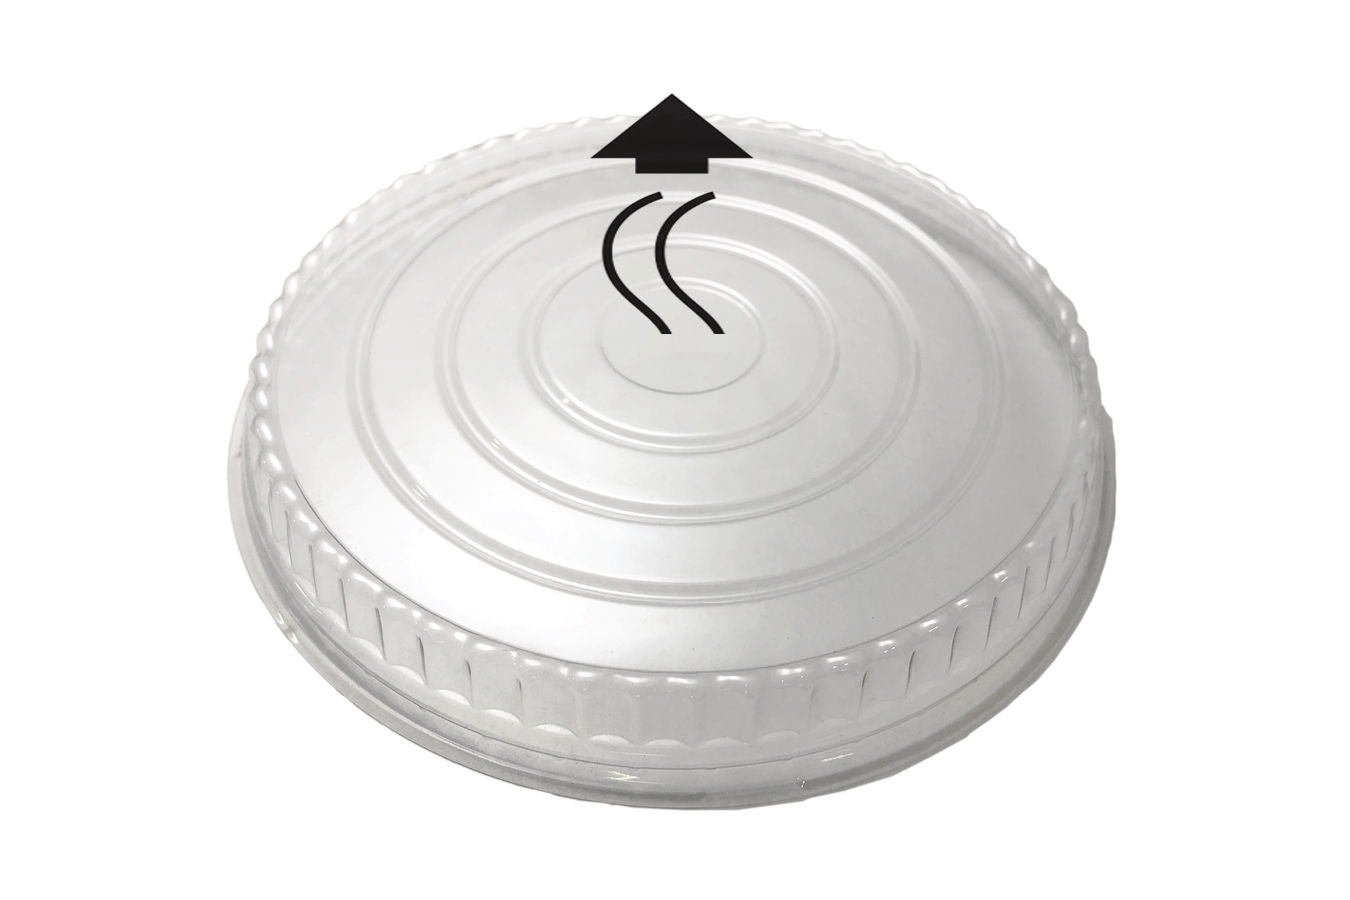 Line art illustration of clear transparent plastic vented OPS lid for Ecopax 32 oz Athena paper bowl